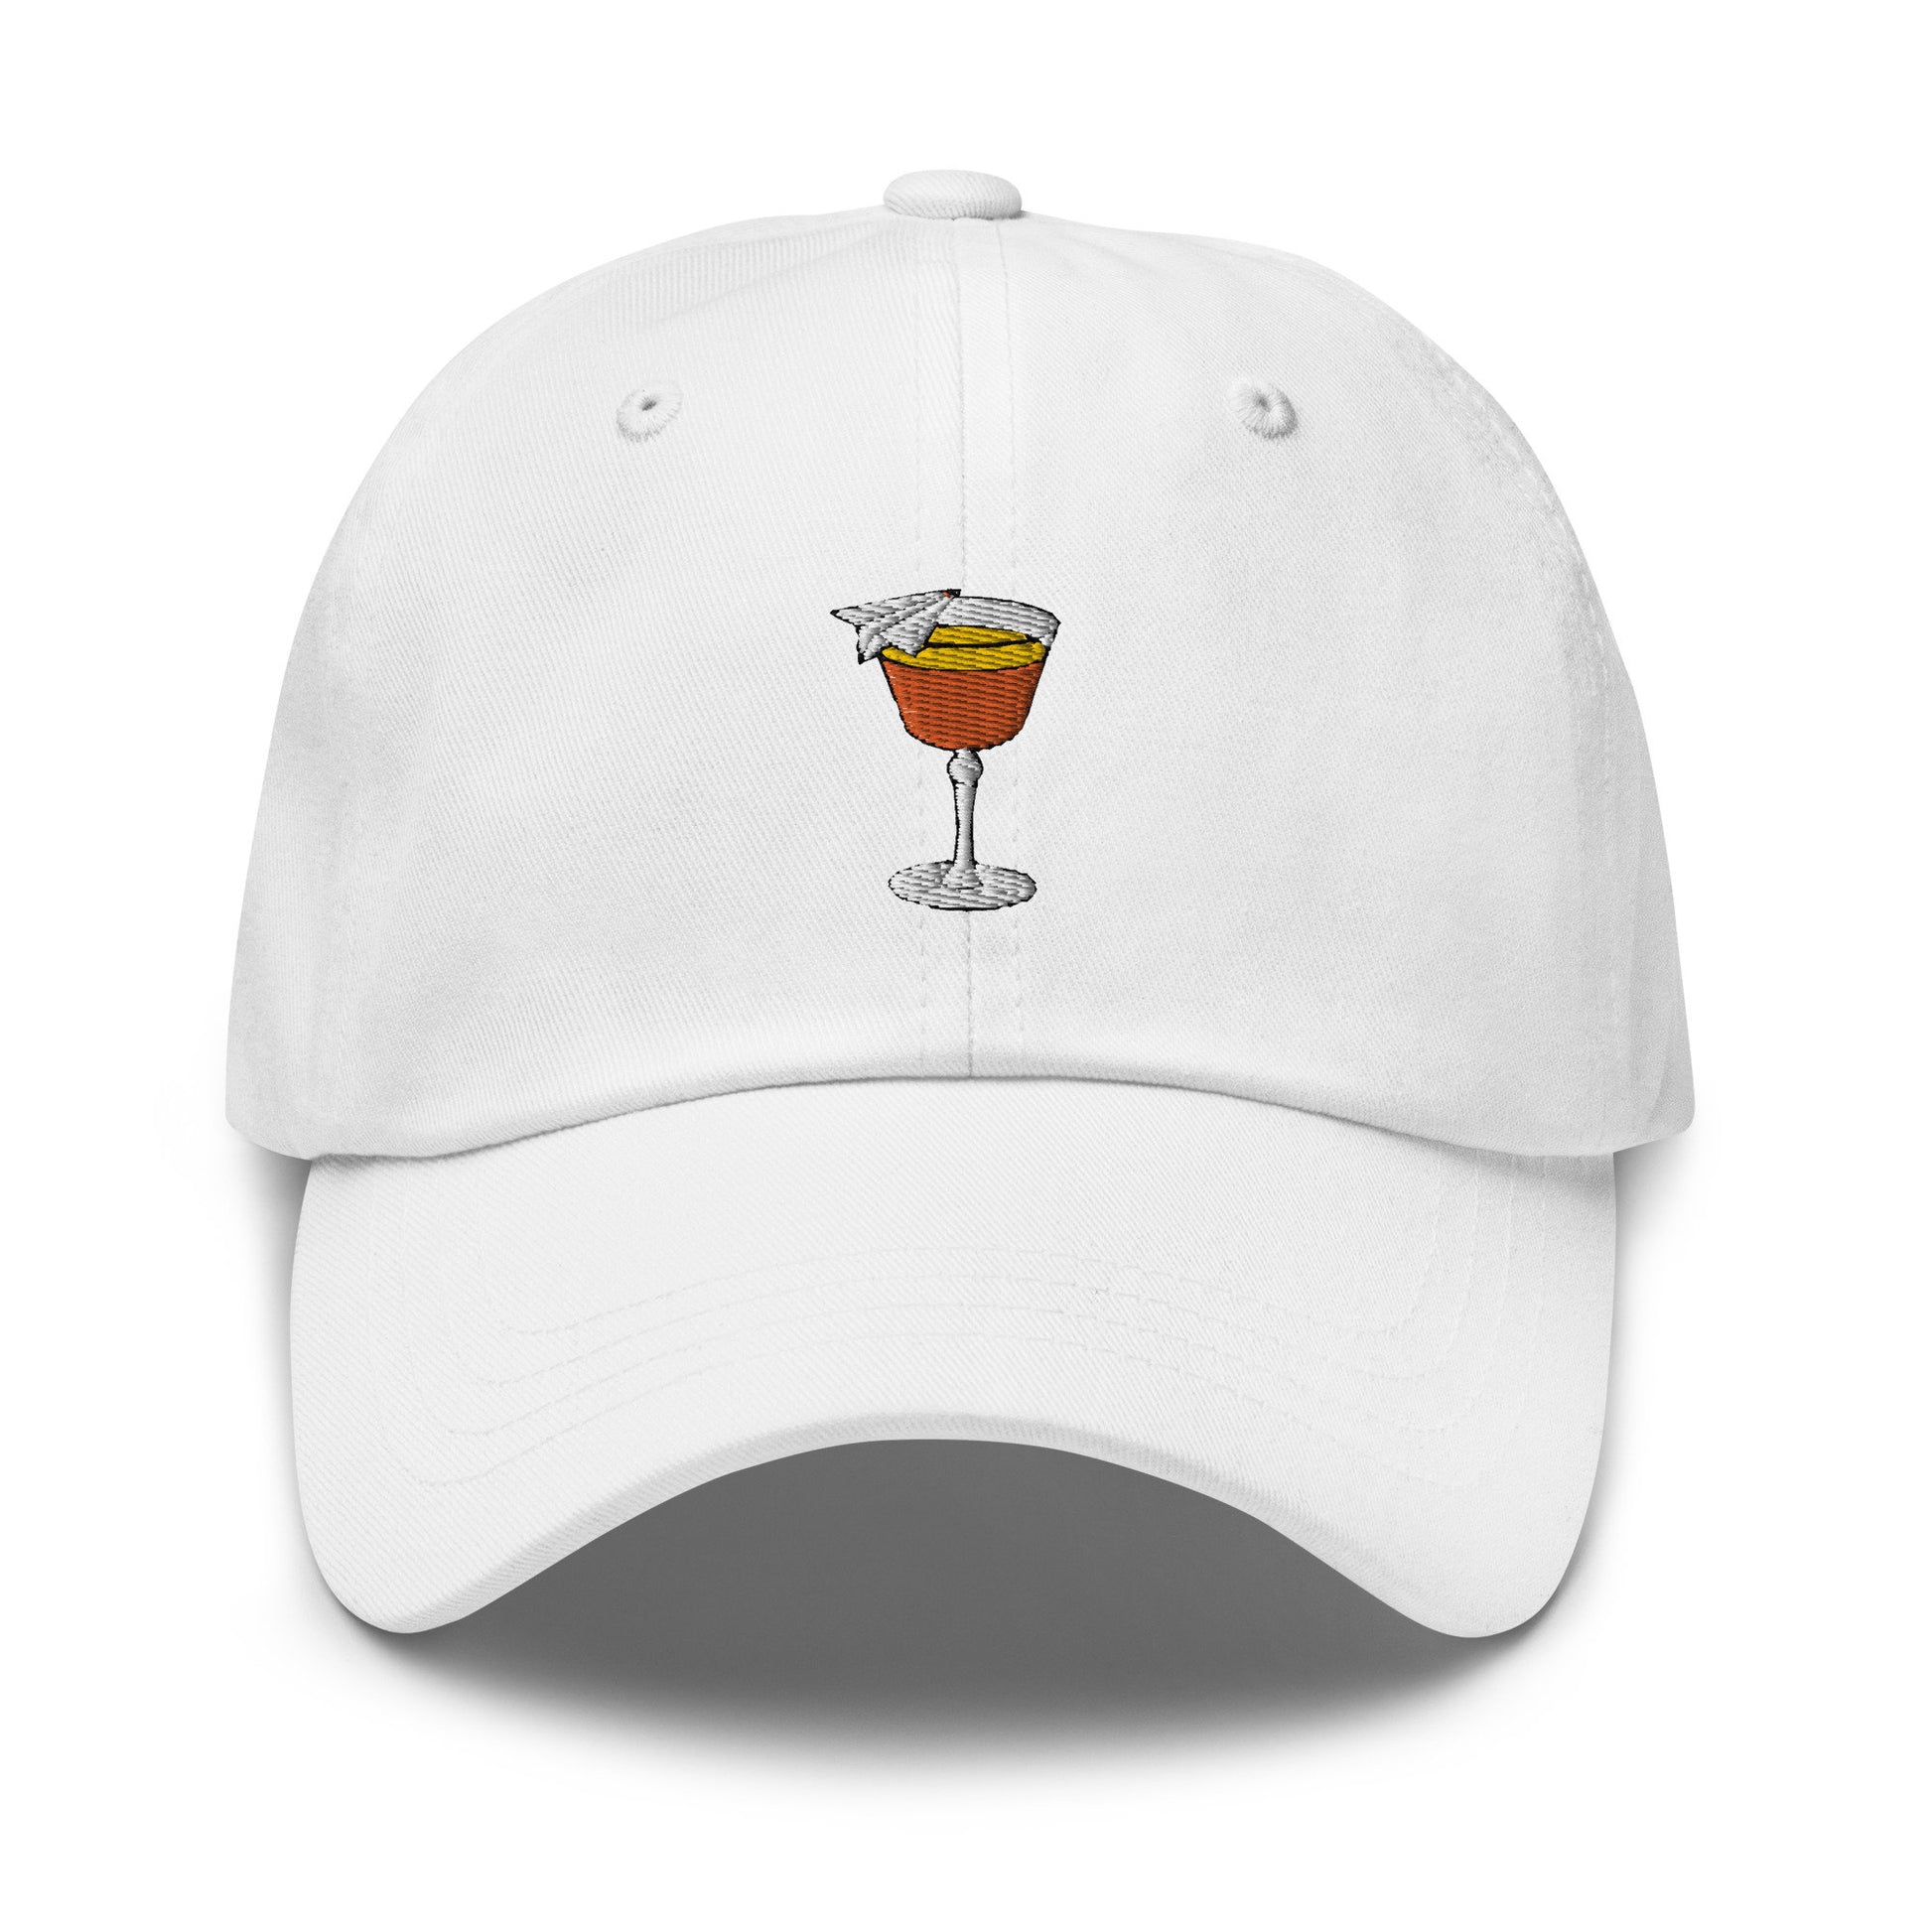 Paper Plane Dad Hat - Bourbon Aperol Cocktail Hat - Cotton Embroidered Cap - Multiple Colors